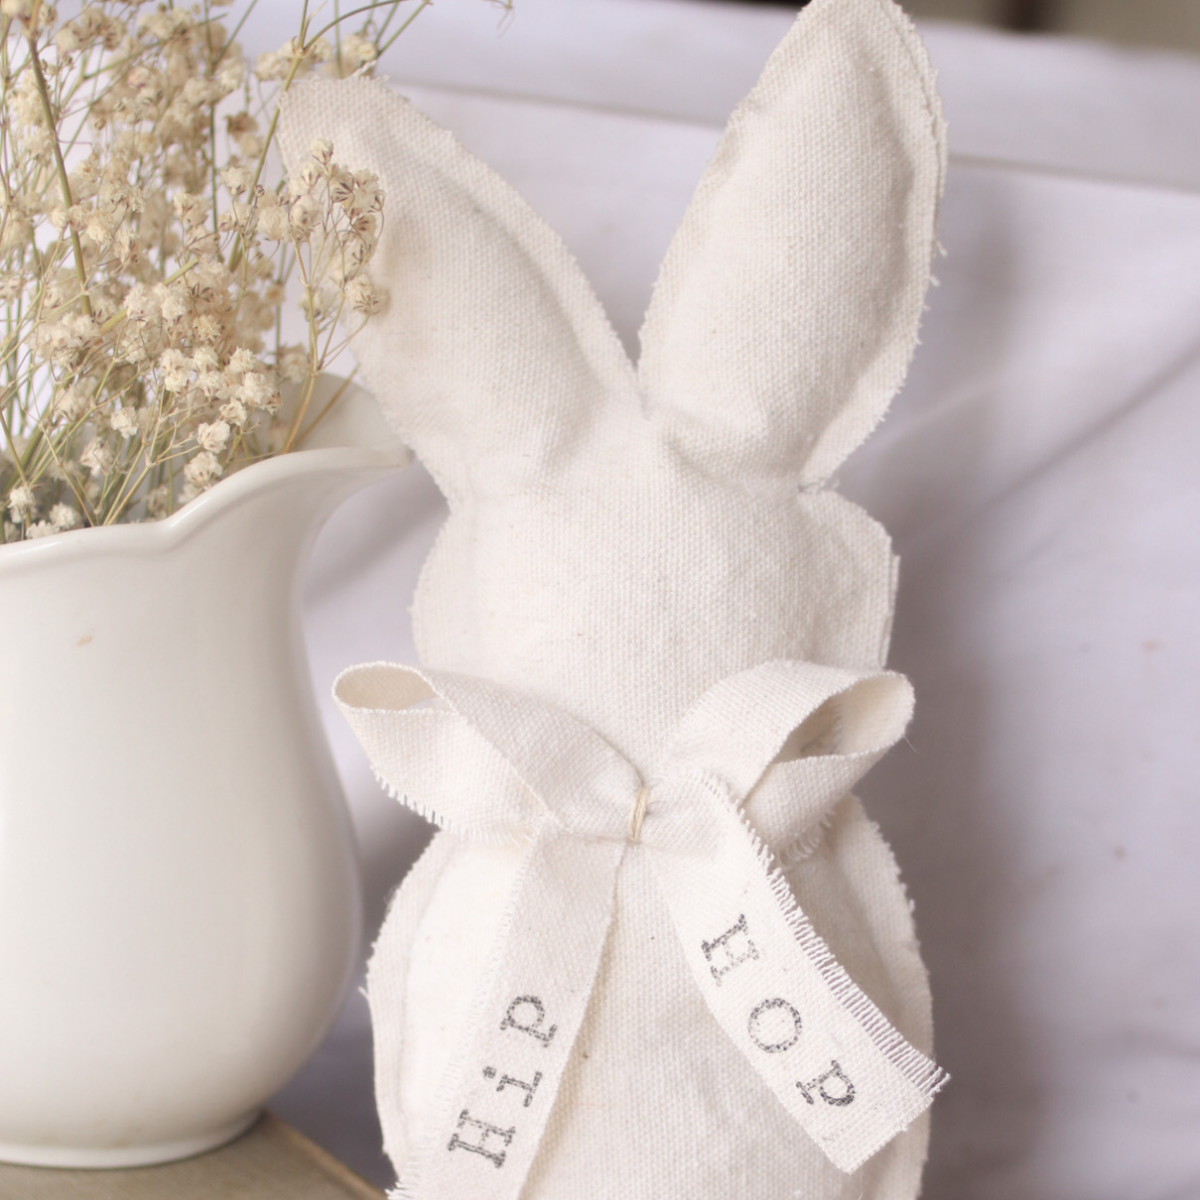 DIY no sew farmhouse fabric bunny